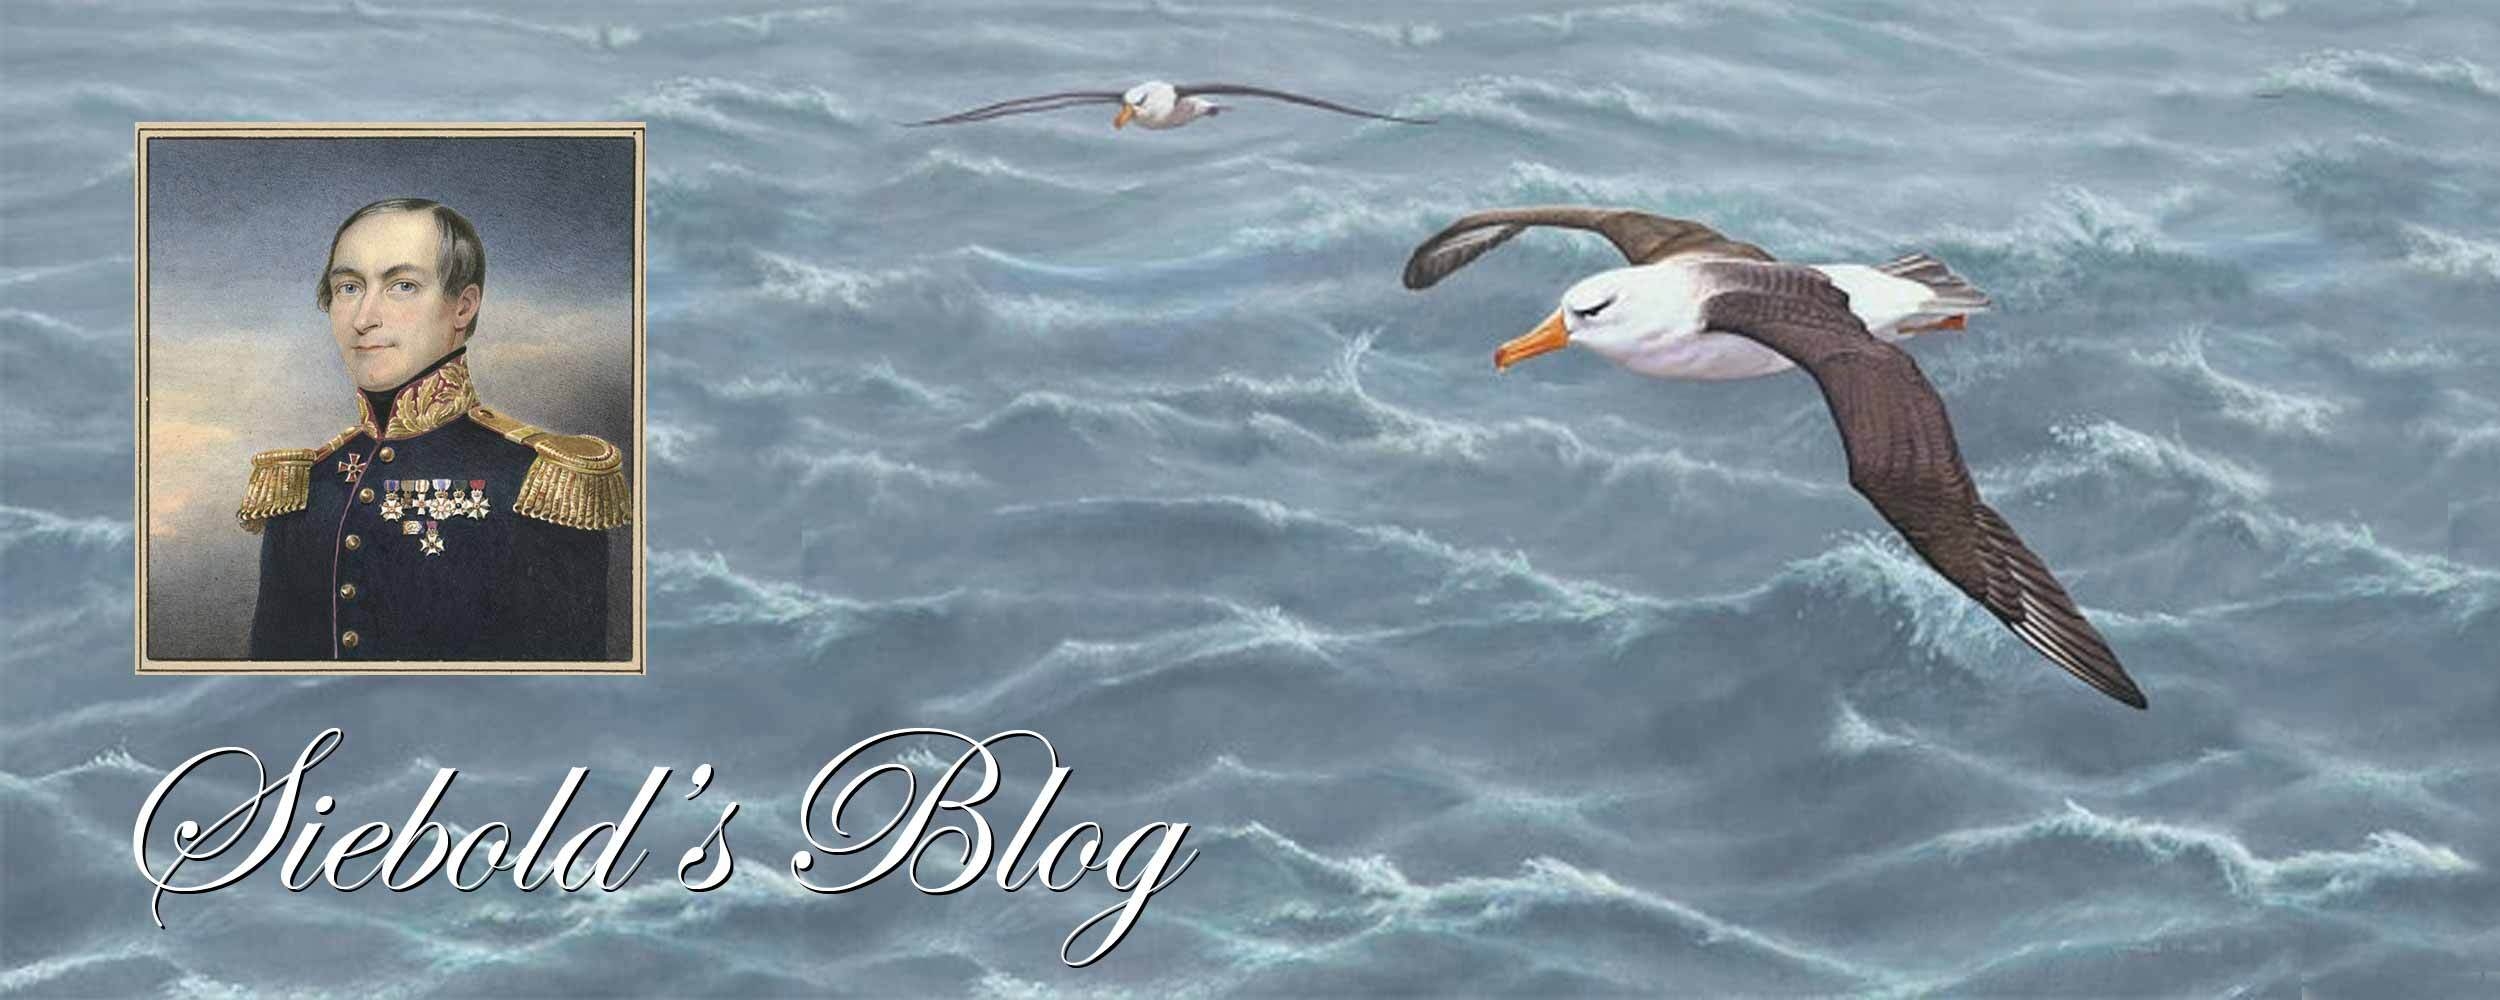 Sieboldblog albatros